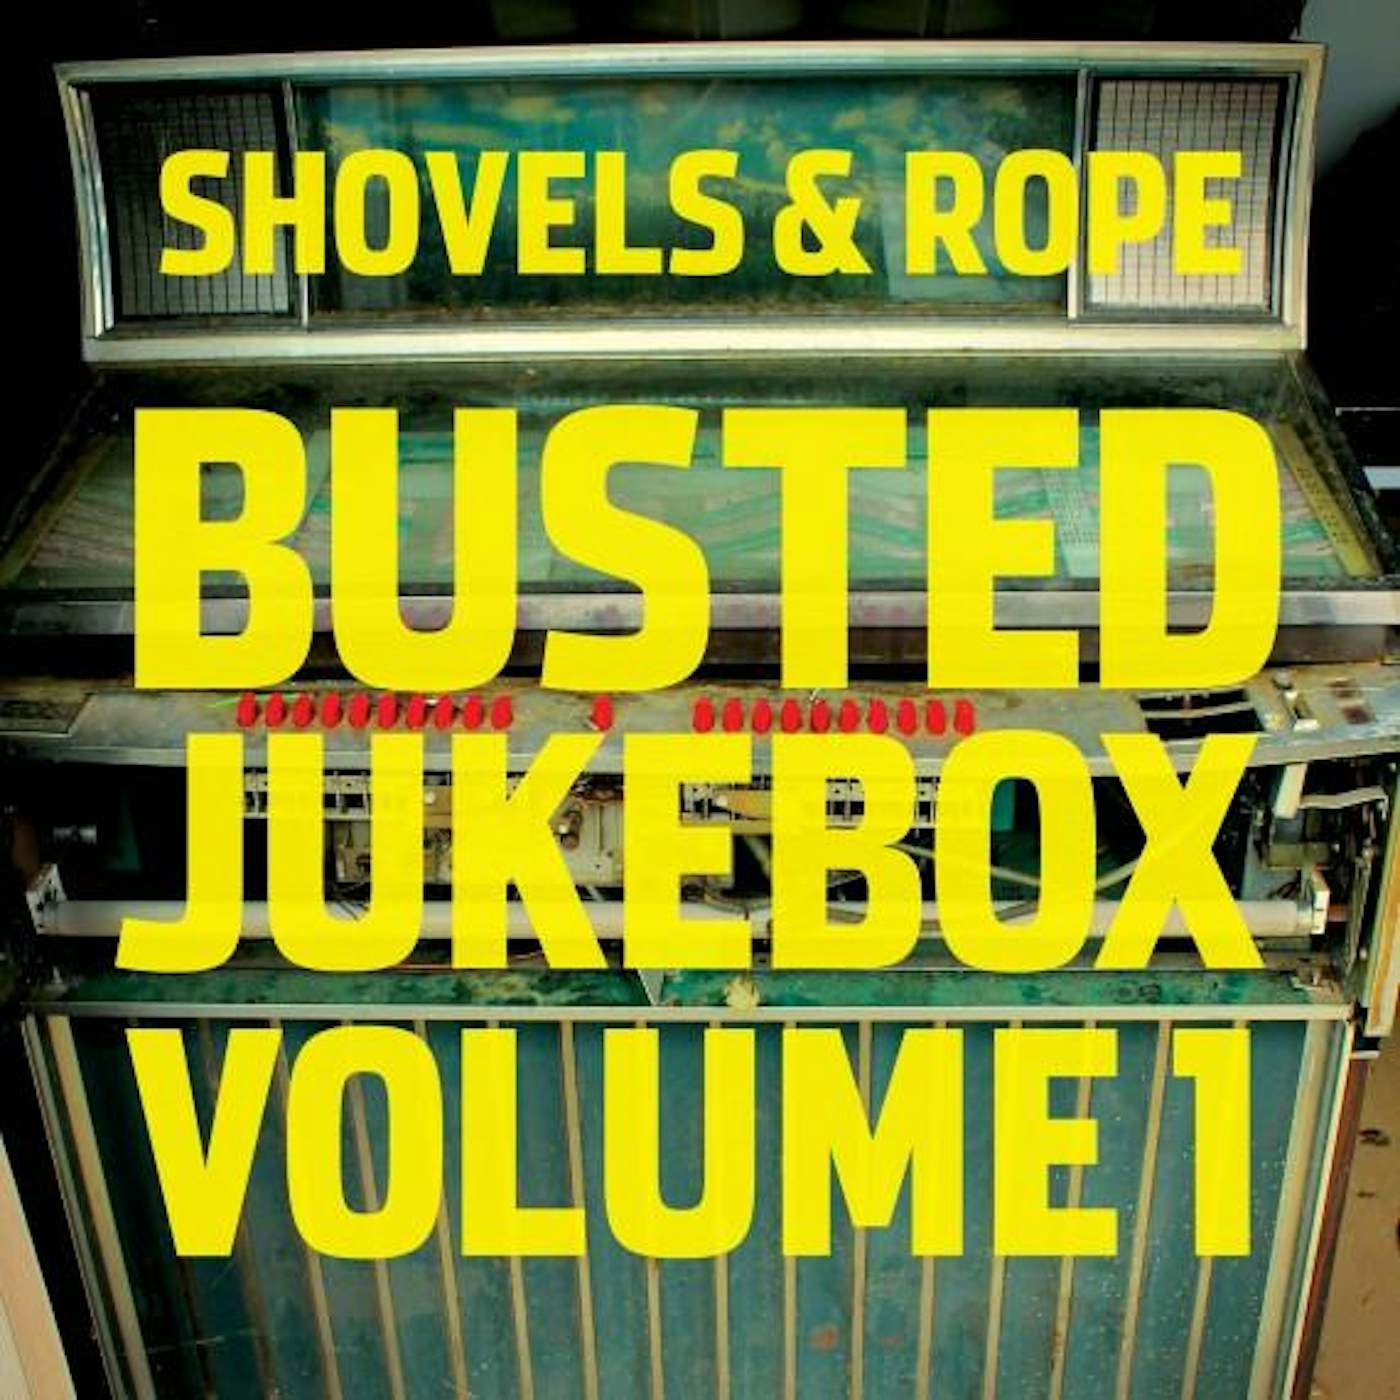 Shovels & Rope Busted Jukebox Vol.1 Vinyl Record